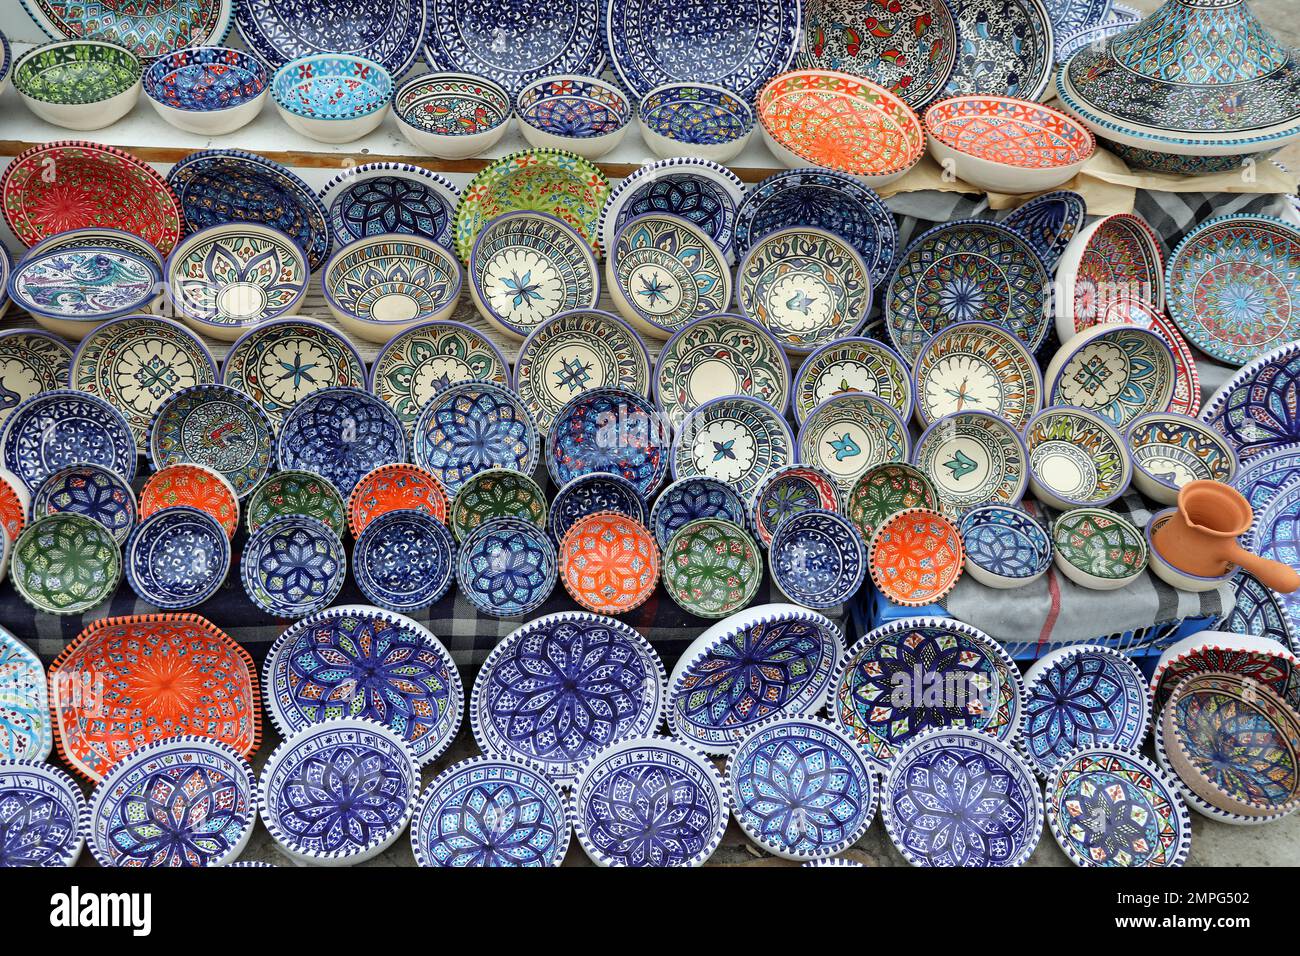 Traditional ceramics displayed in Tunisia Stock Photo